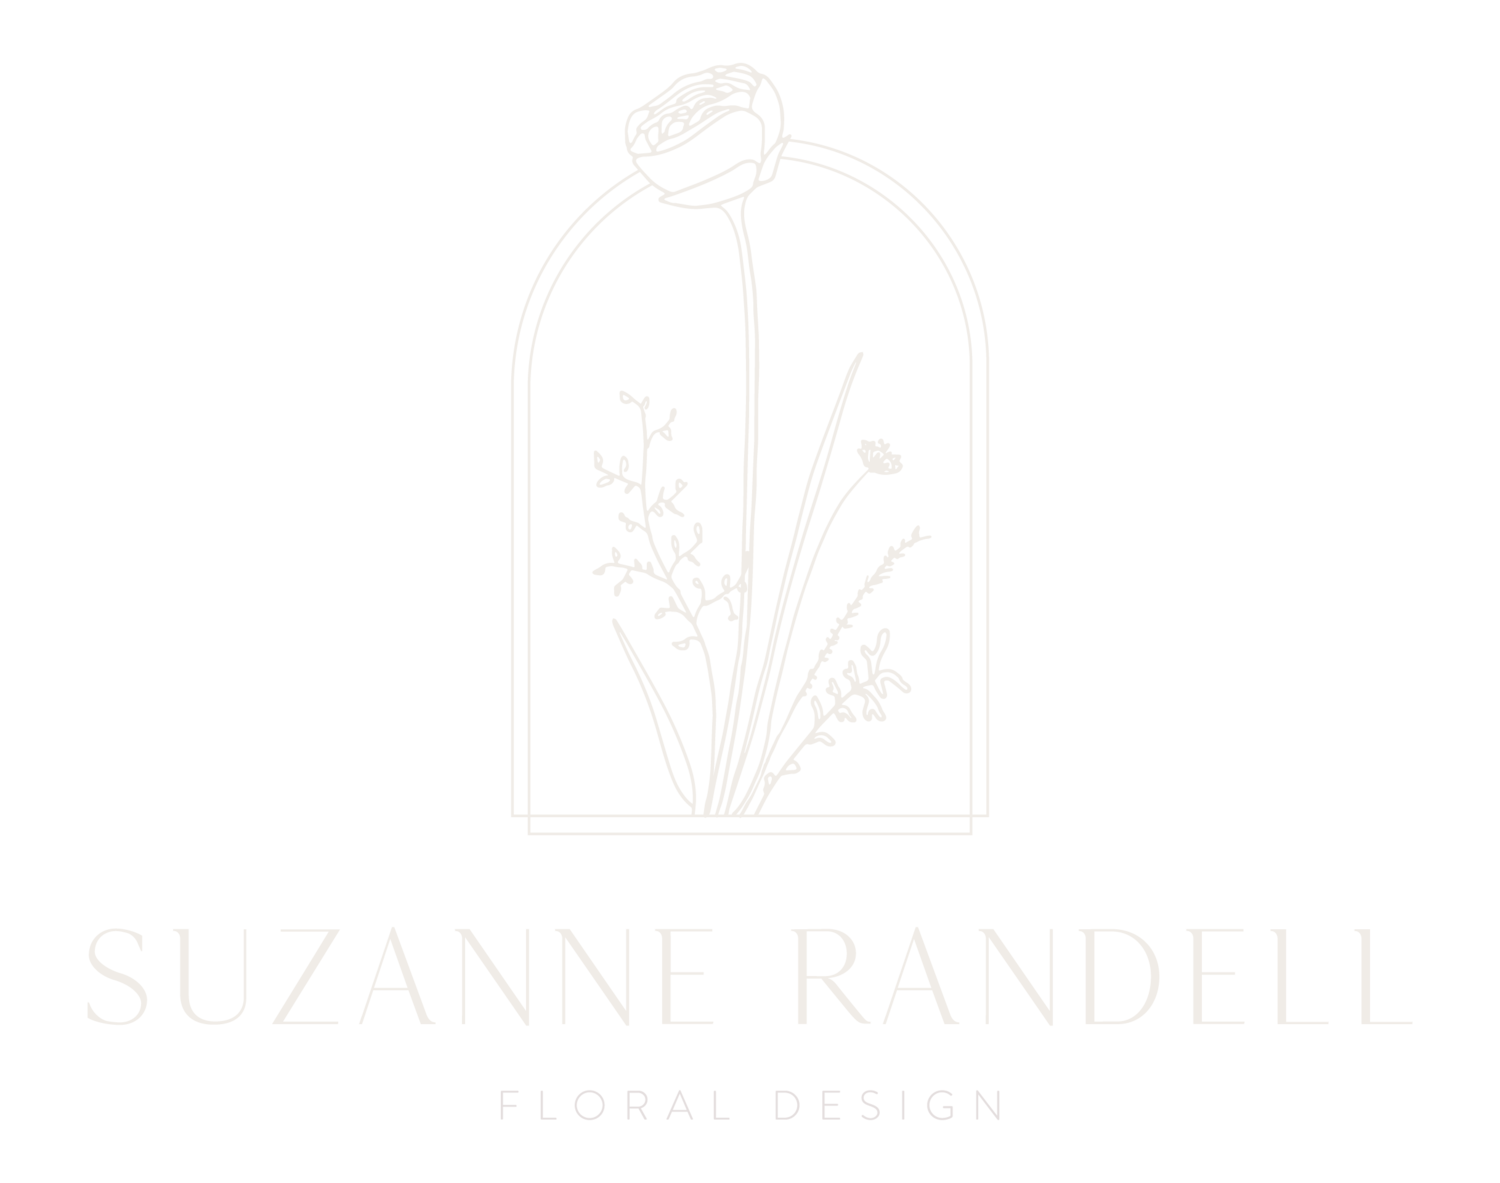 Suzanne Randell Floral Design